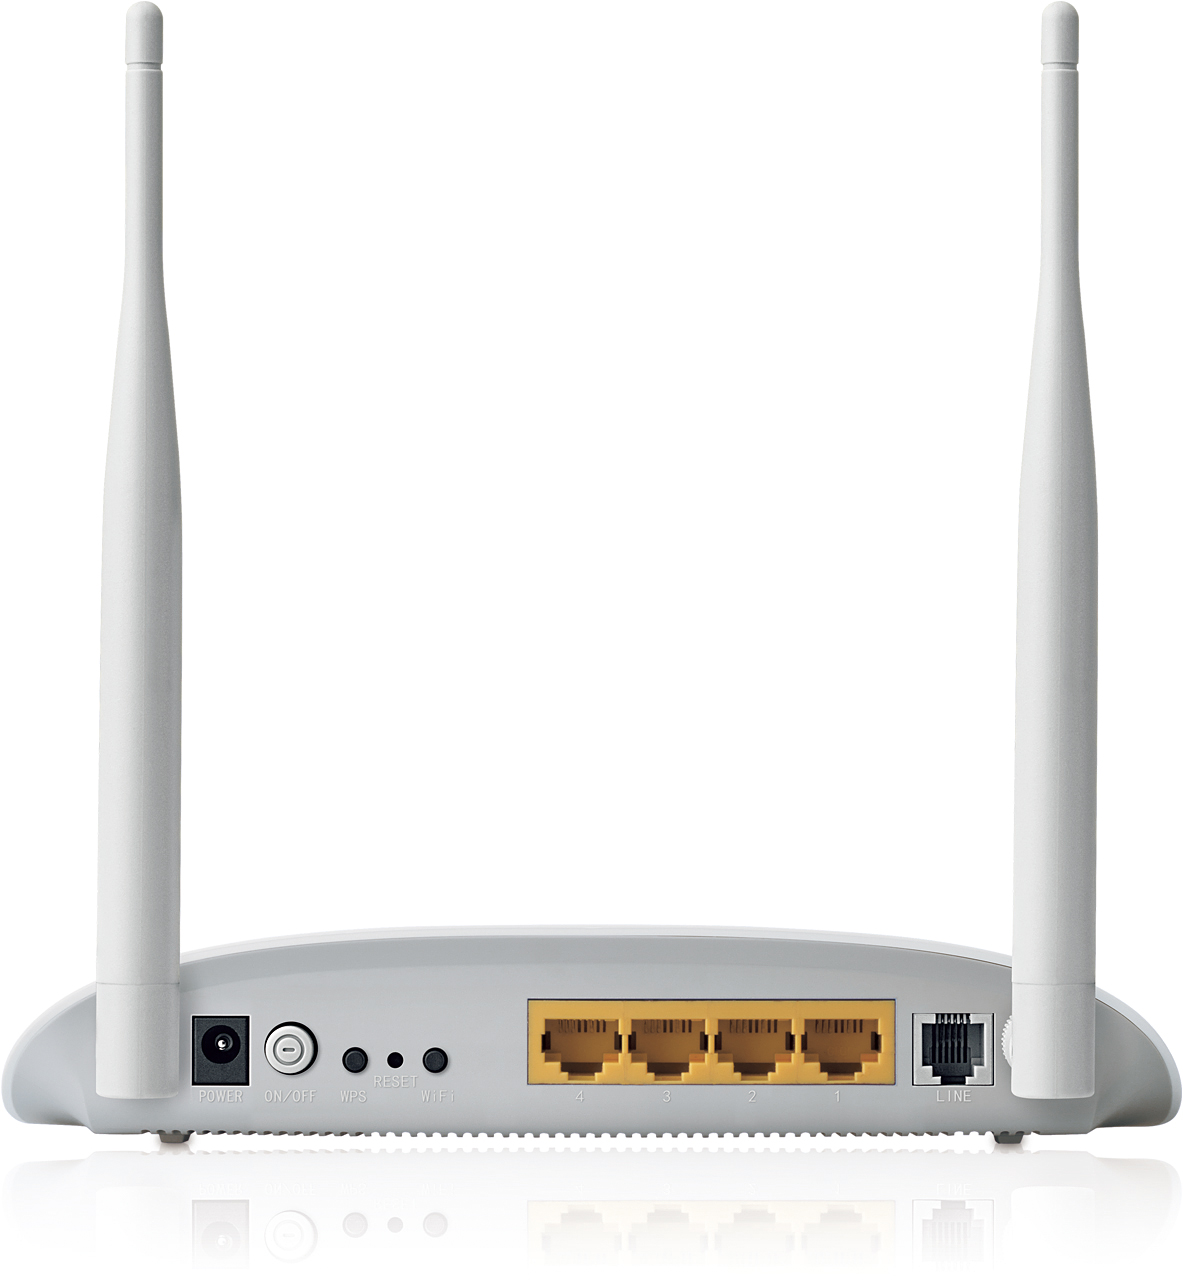 MODEM ADSL WIFI CHUAN N 300MBPS TP-LINK TD-W8961ND, MODEM ADSL CHUAN N TP-LINK TD-W8961